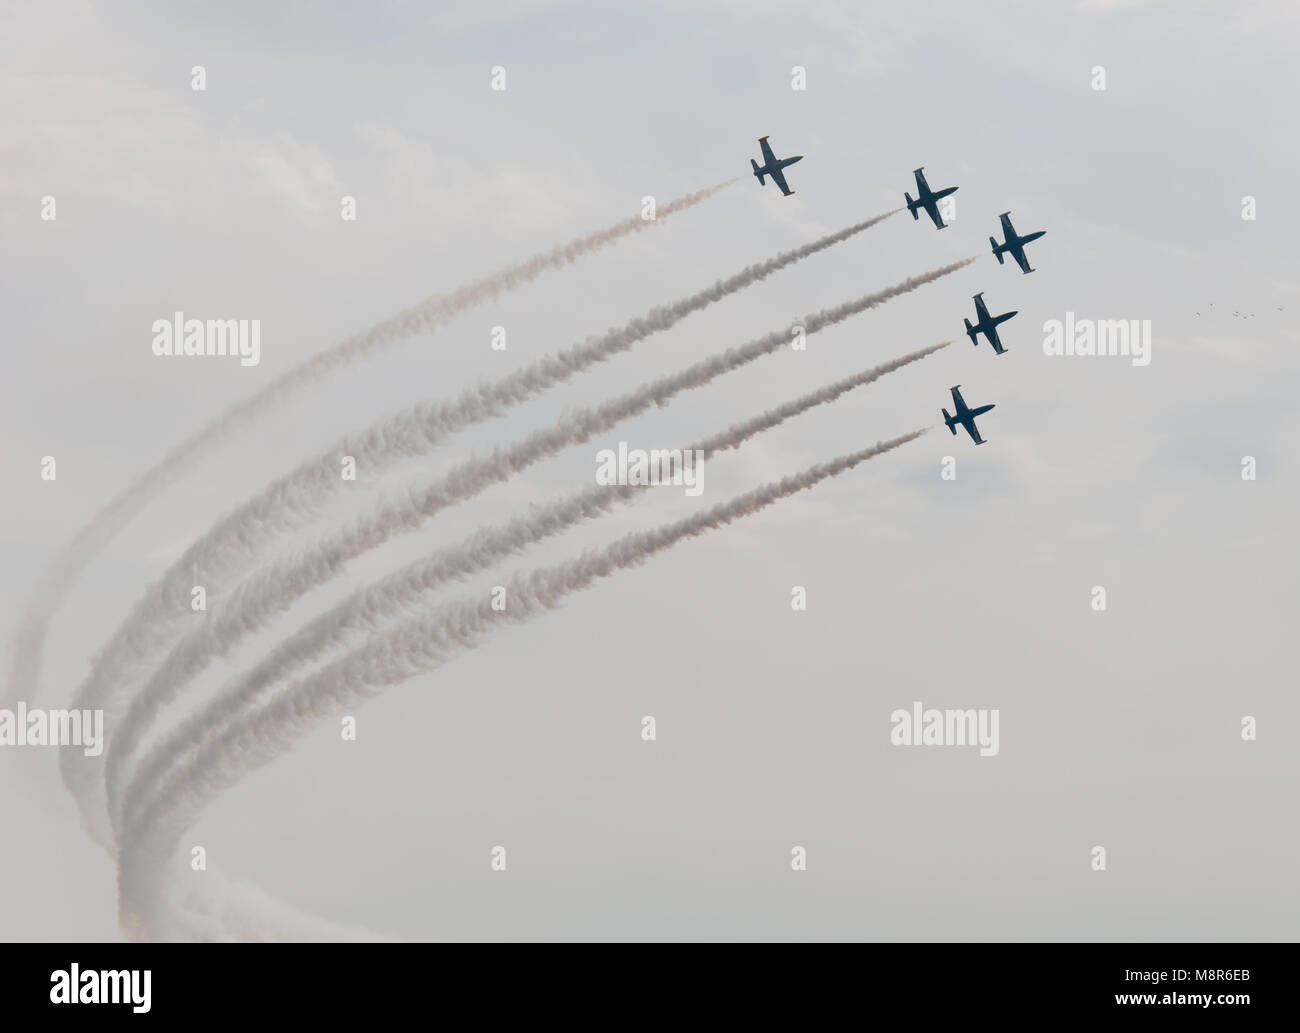 Sechs Düsenflugzeuge fliegen in Sequenz Overhead. Stockfoto